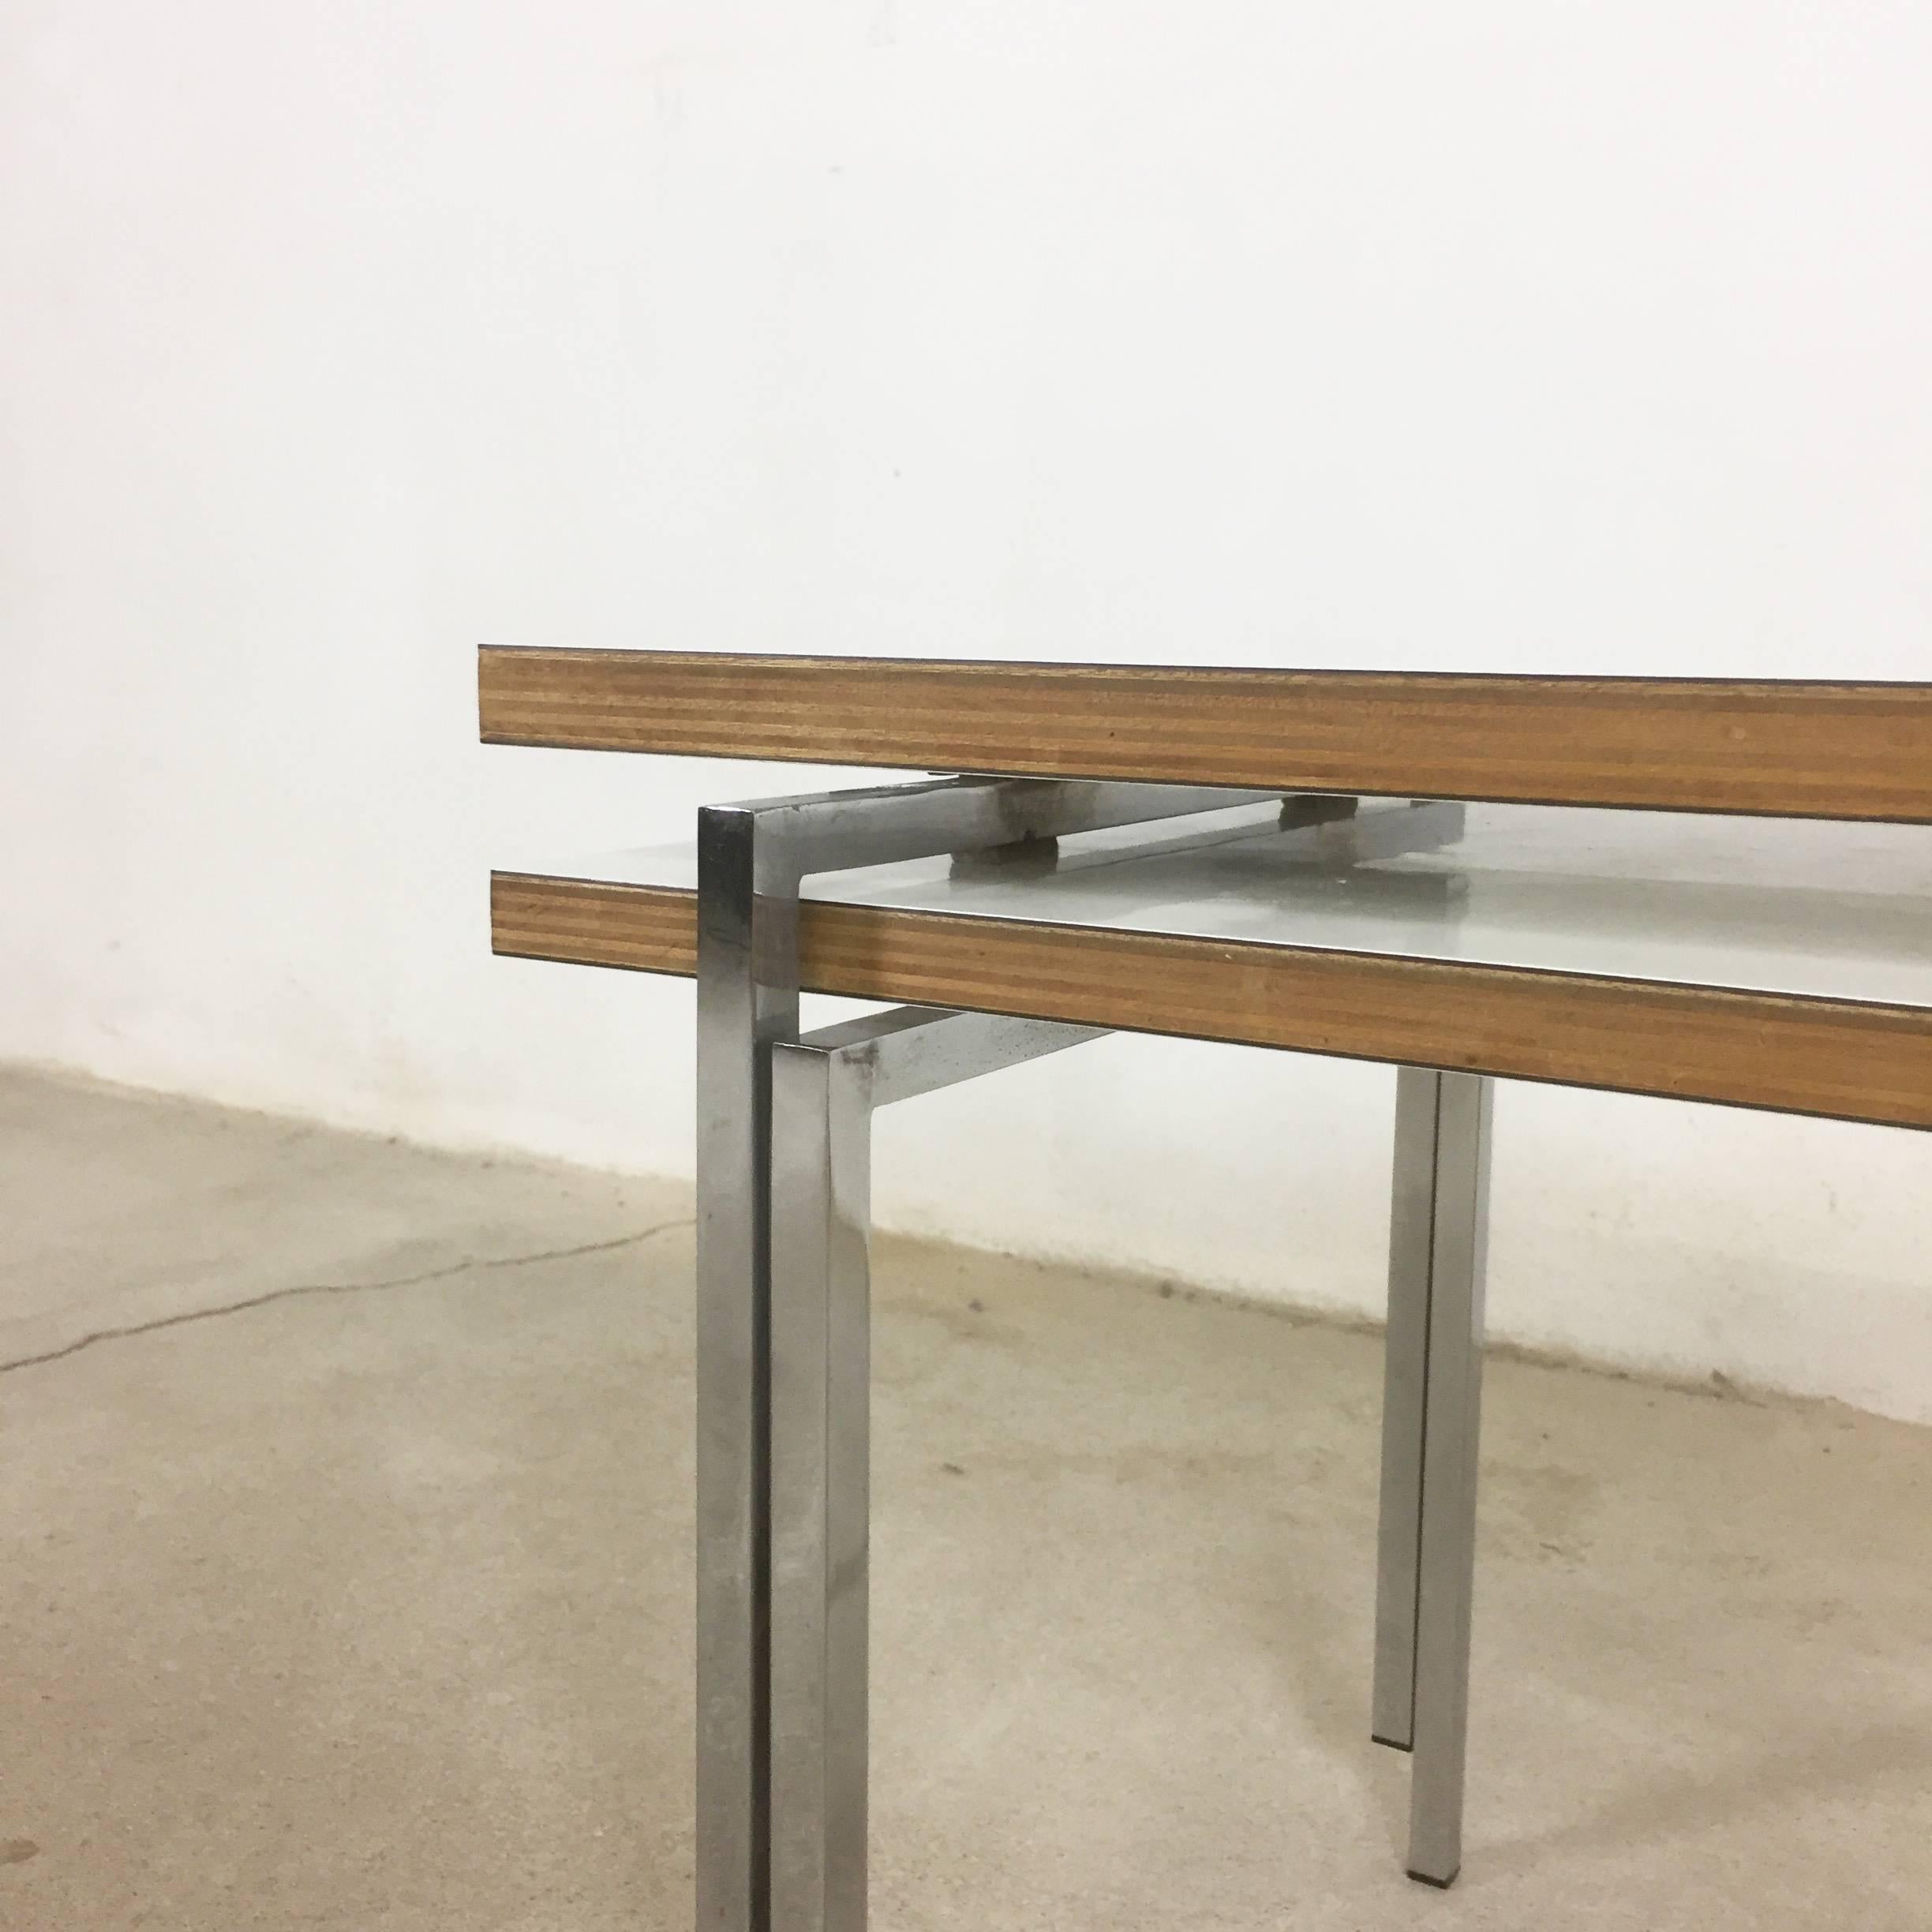 Set of Two Modernist Stacking Tables, Trix & Robert Haussmann, Switzerland, 1957 For Sale 1